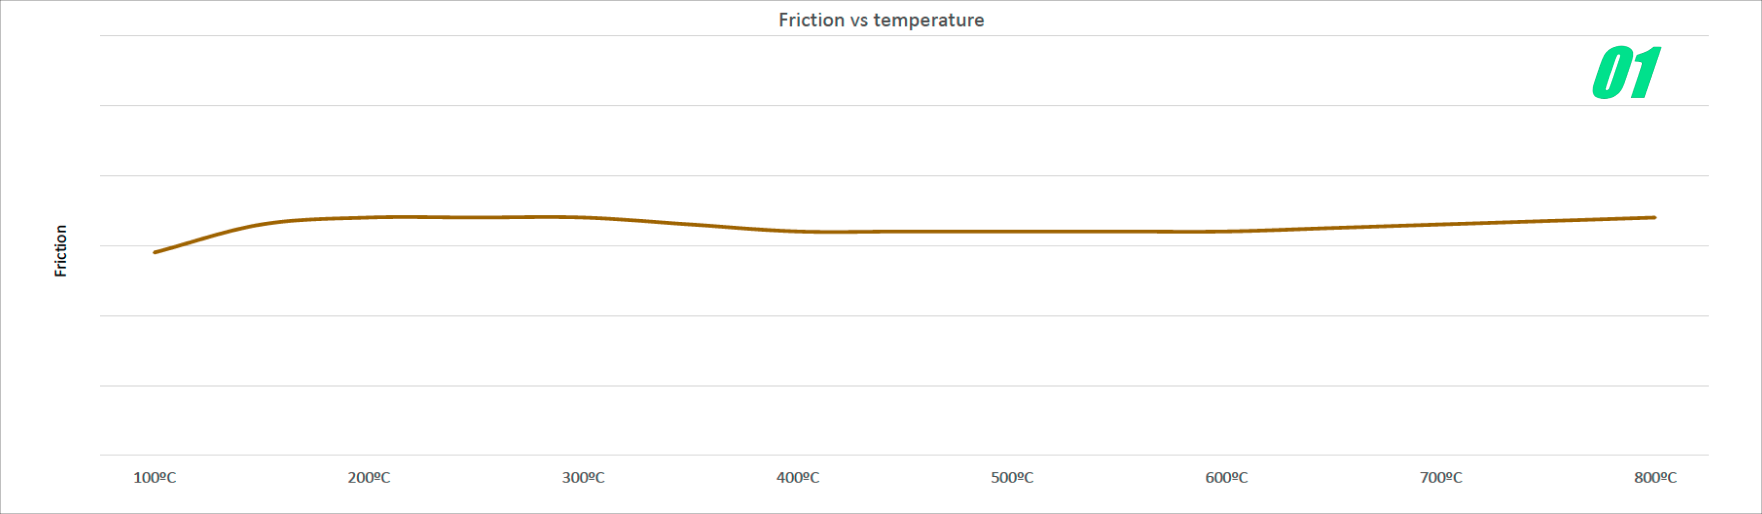 PFC 01 Compound Friction Vs Temperature